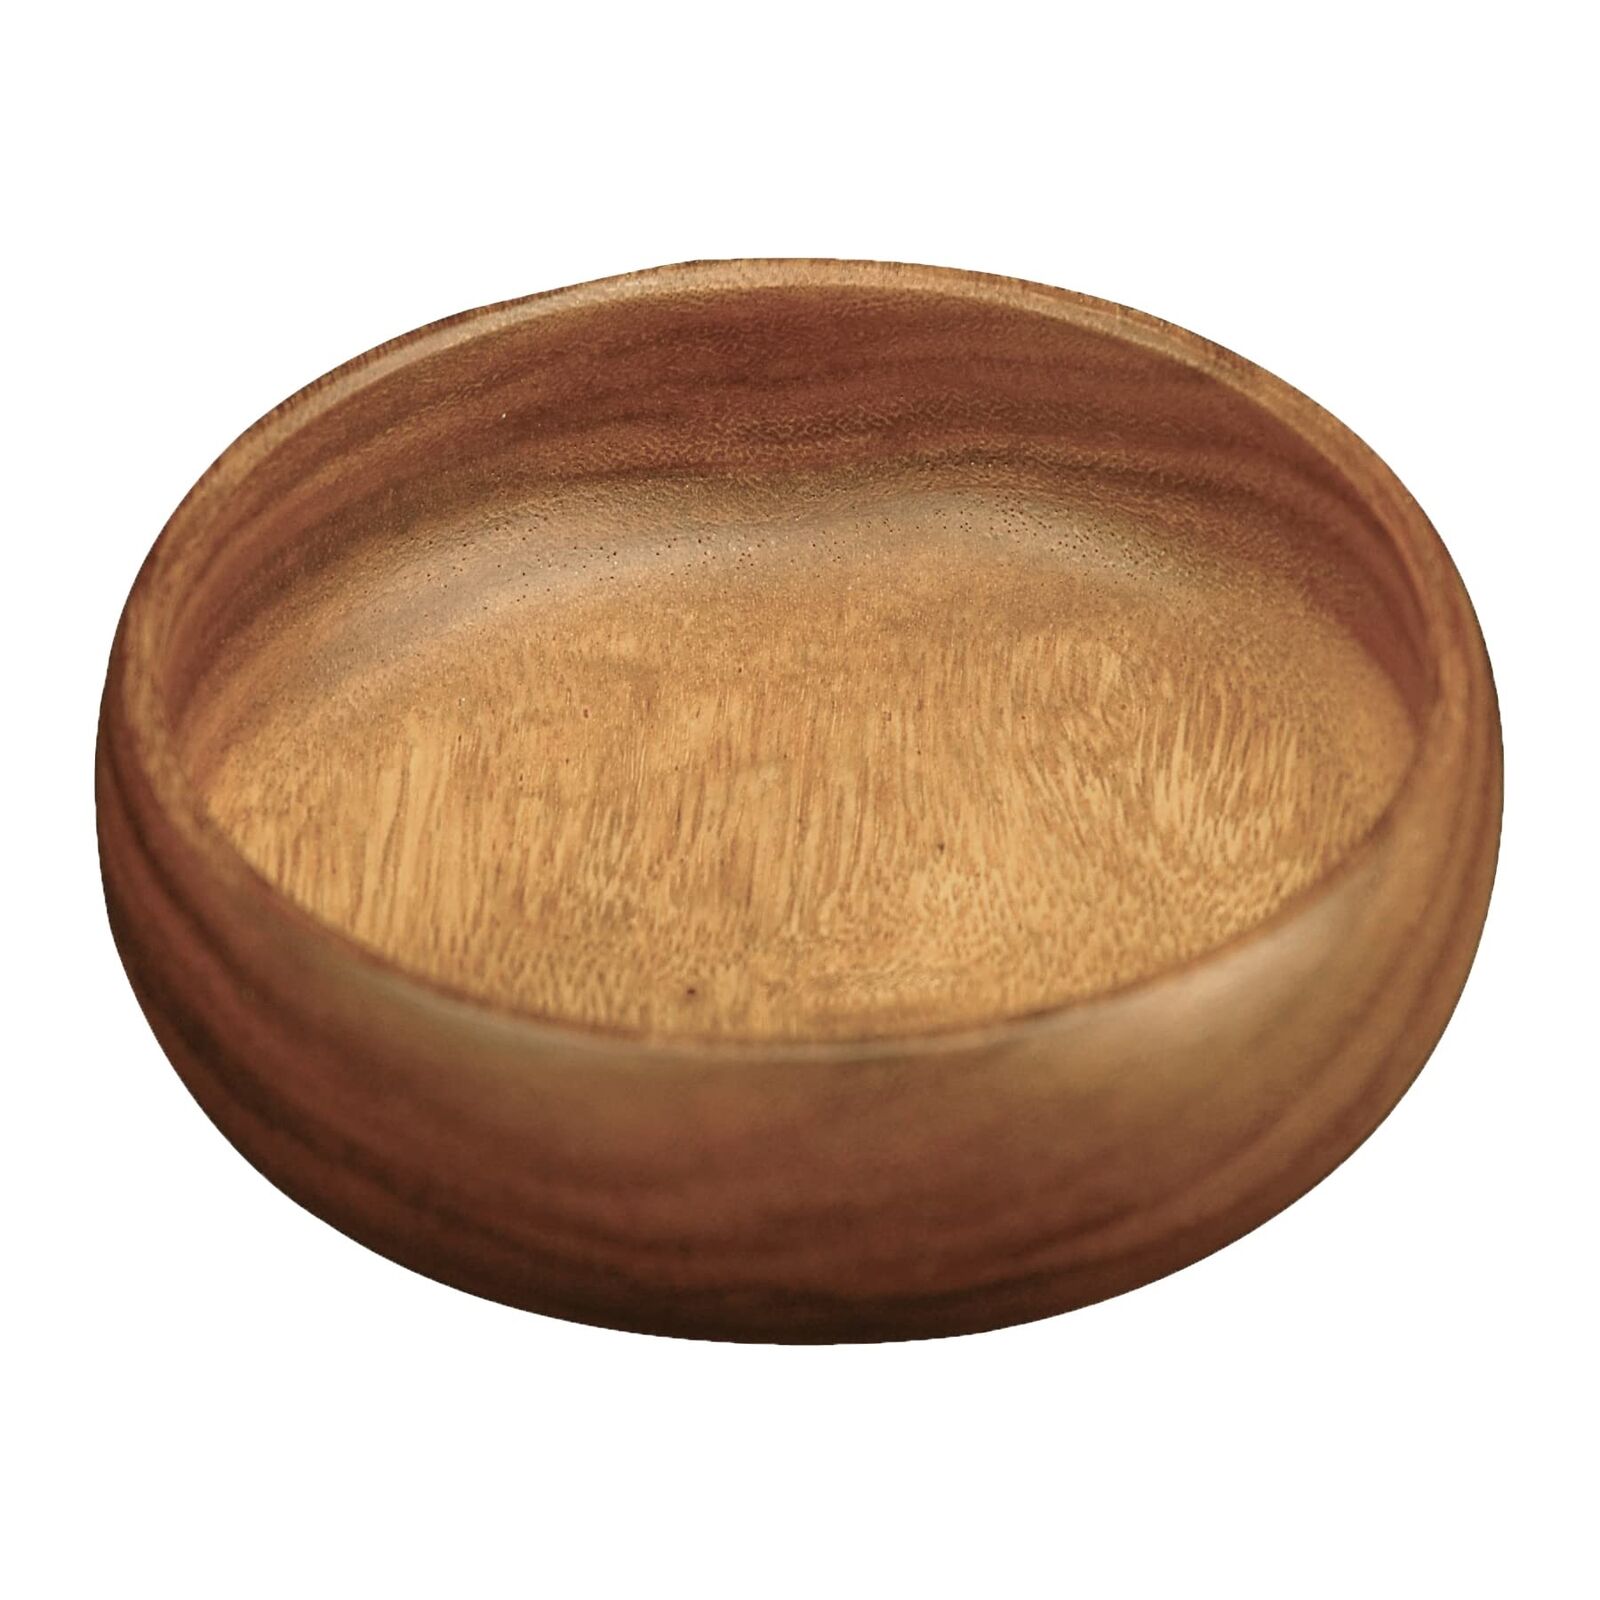 Acaciaware Round Calabash Bowl, 6-Inch by 2-Inch